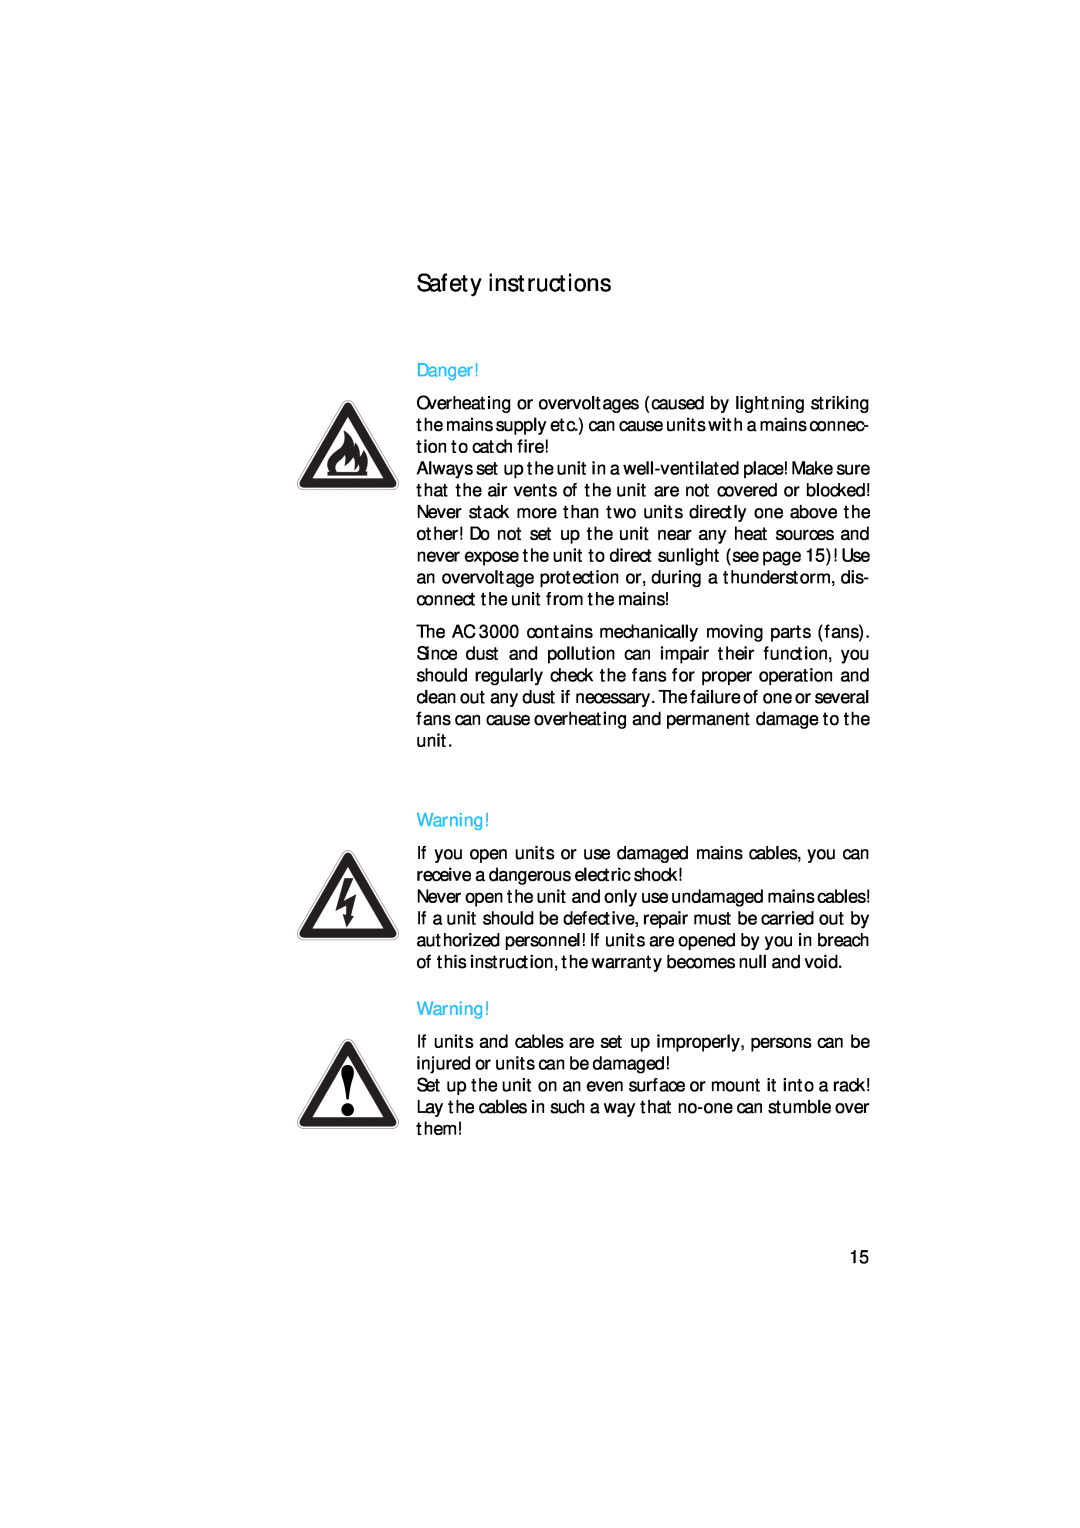 Sennheiser AC 3000 manual Safety instructions, Danger 